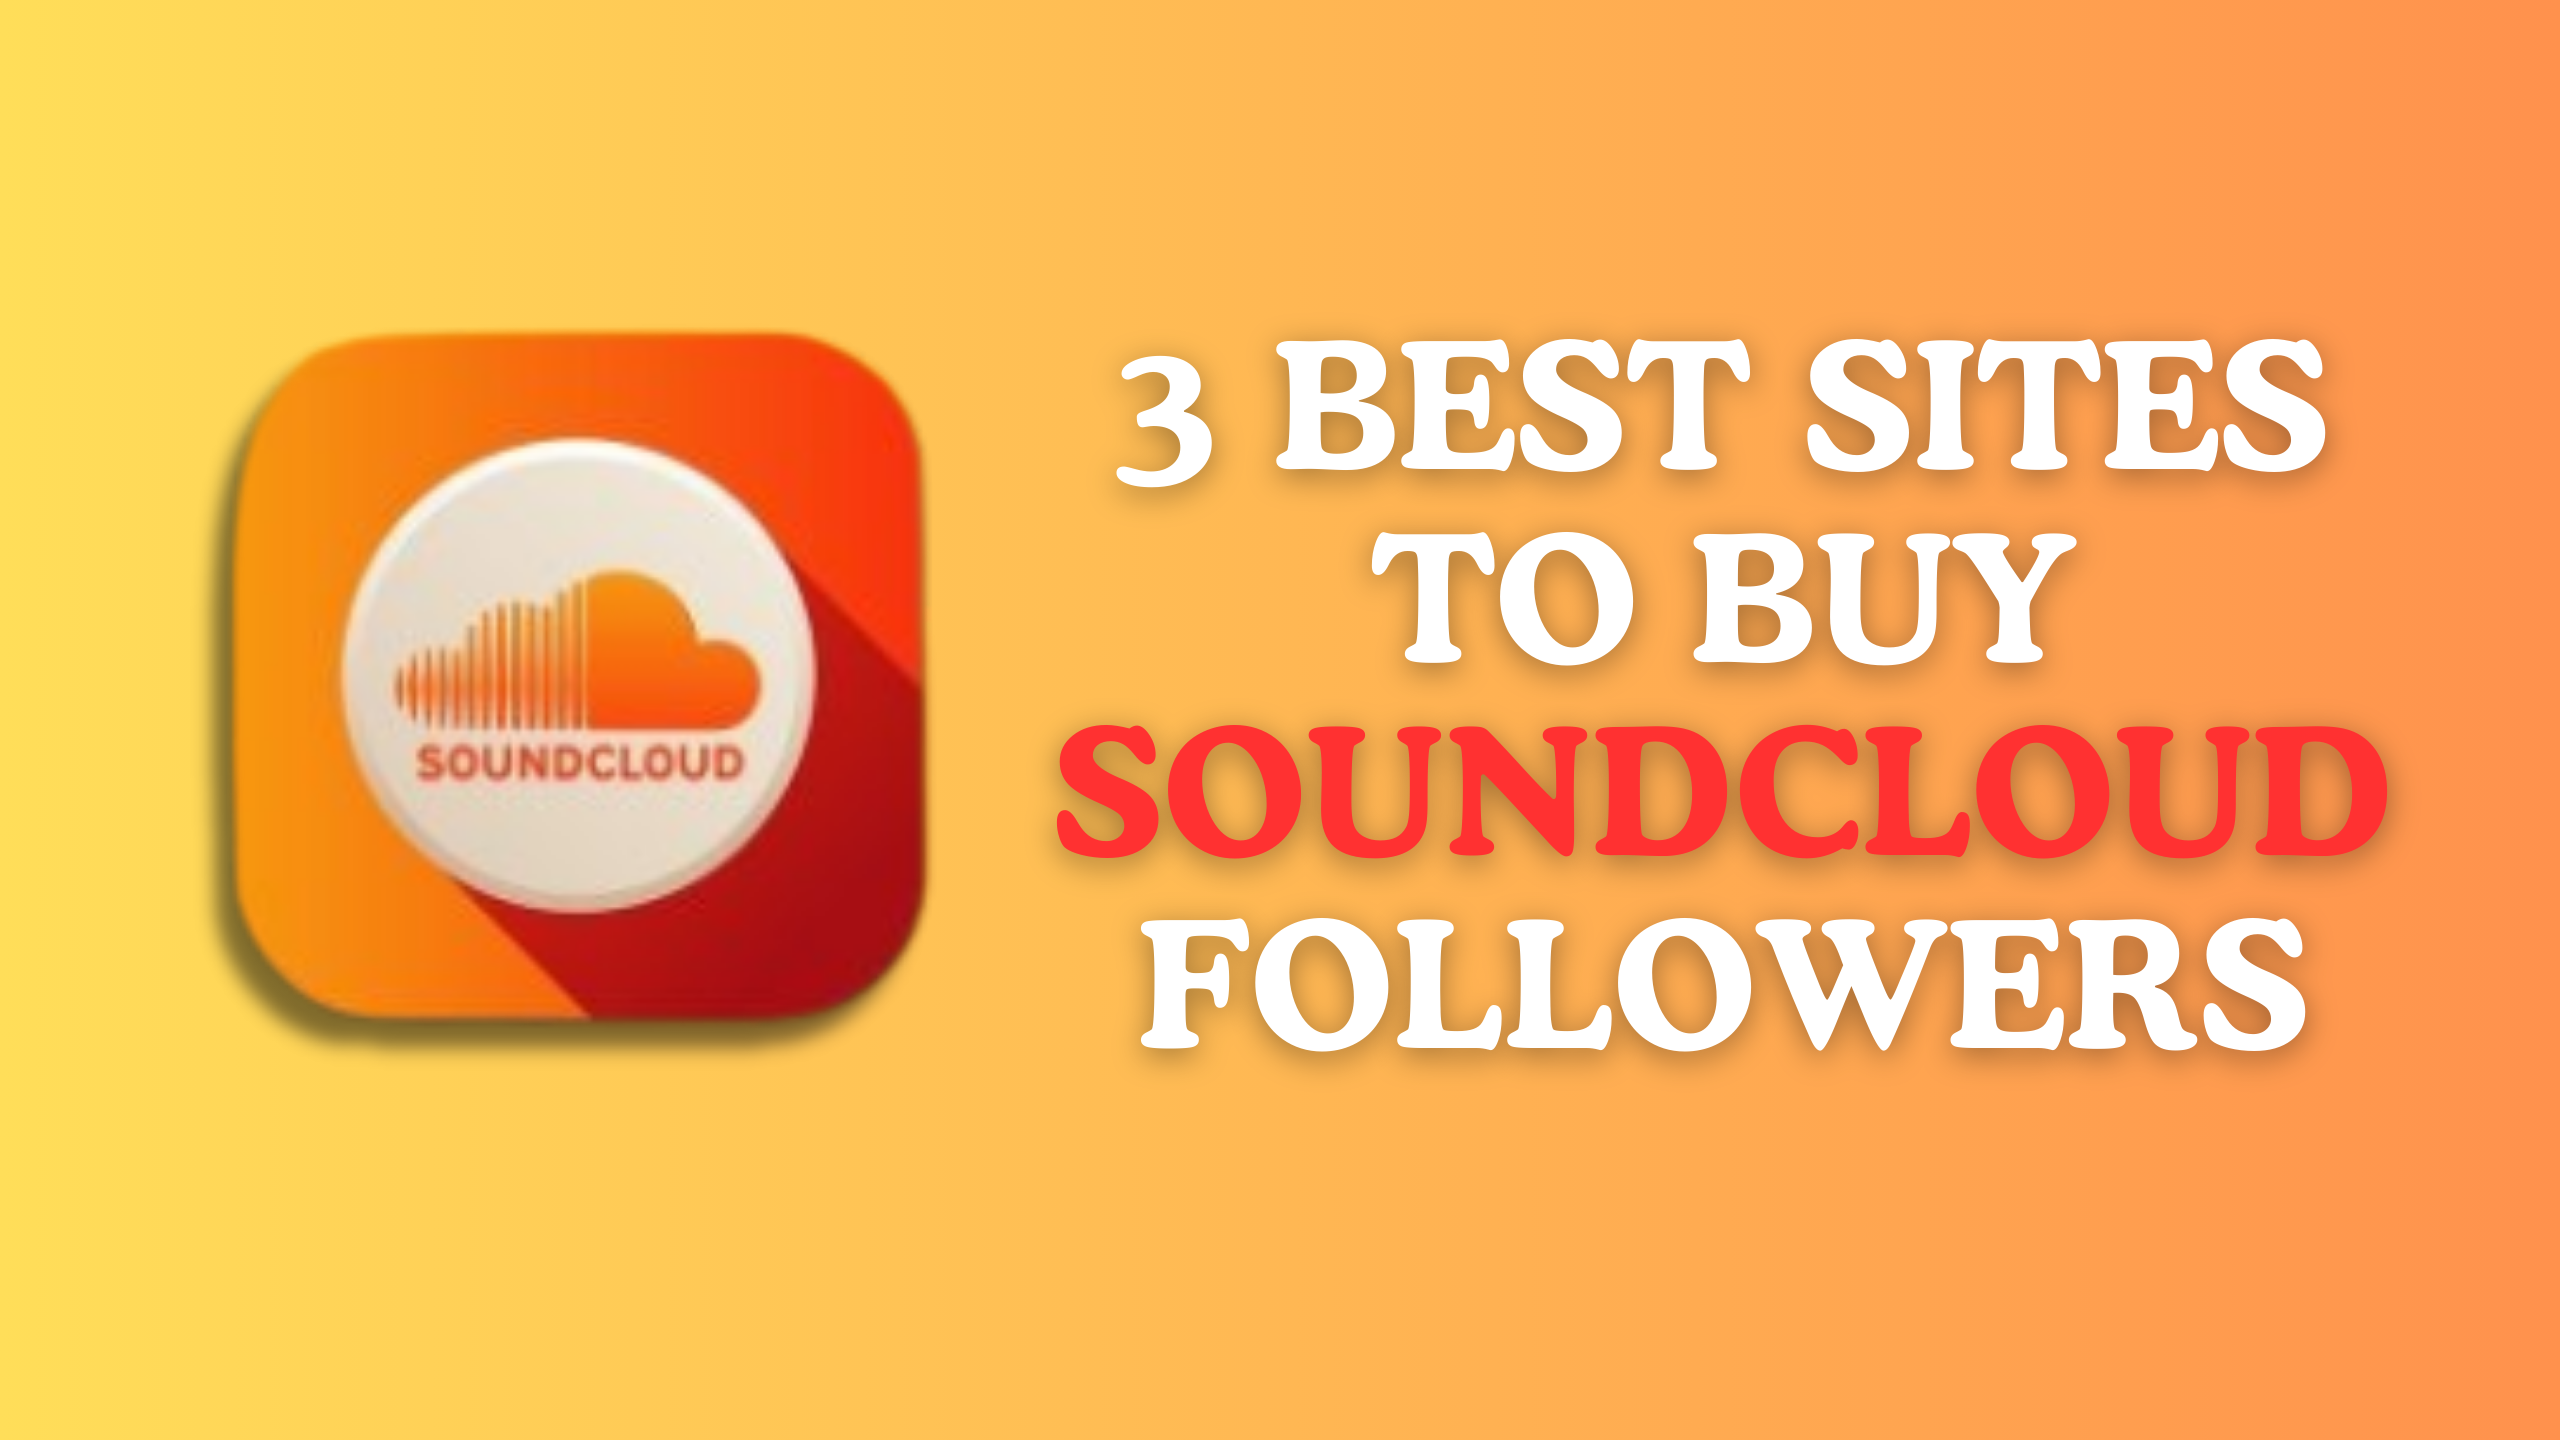 3 BEST SITES TO BUY SOUNDCLOUD FOLLOWERS